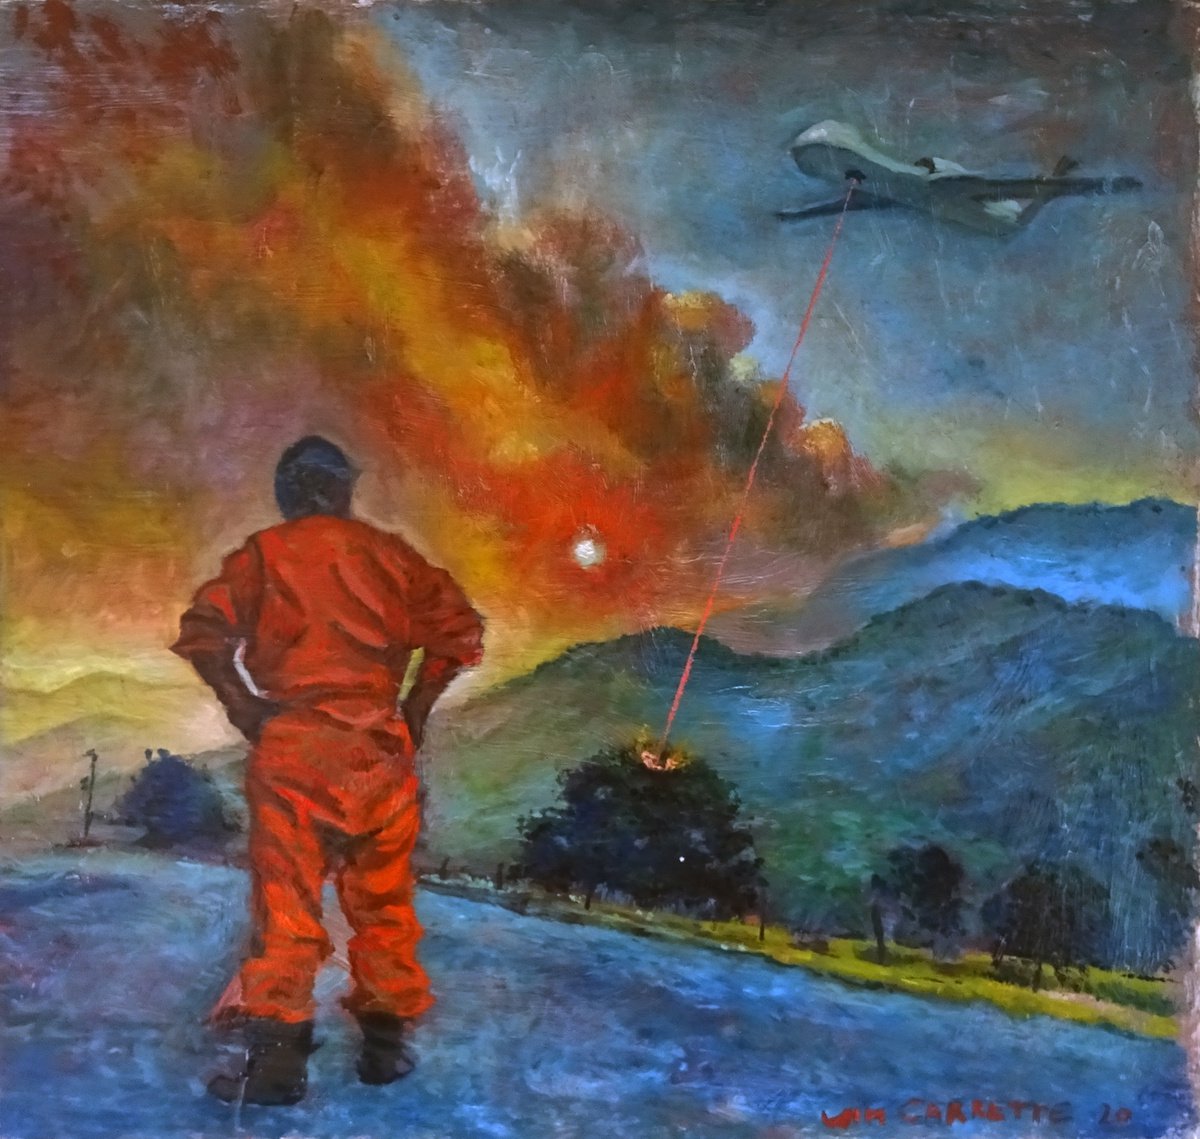 Australia Fires by Wim Carrette